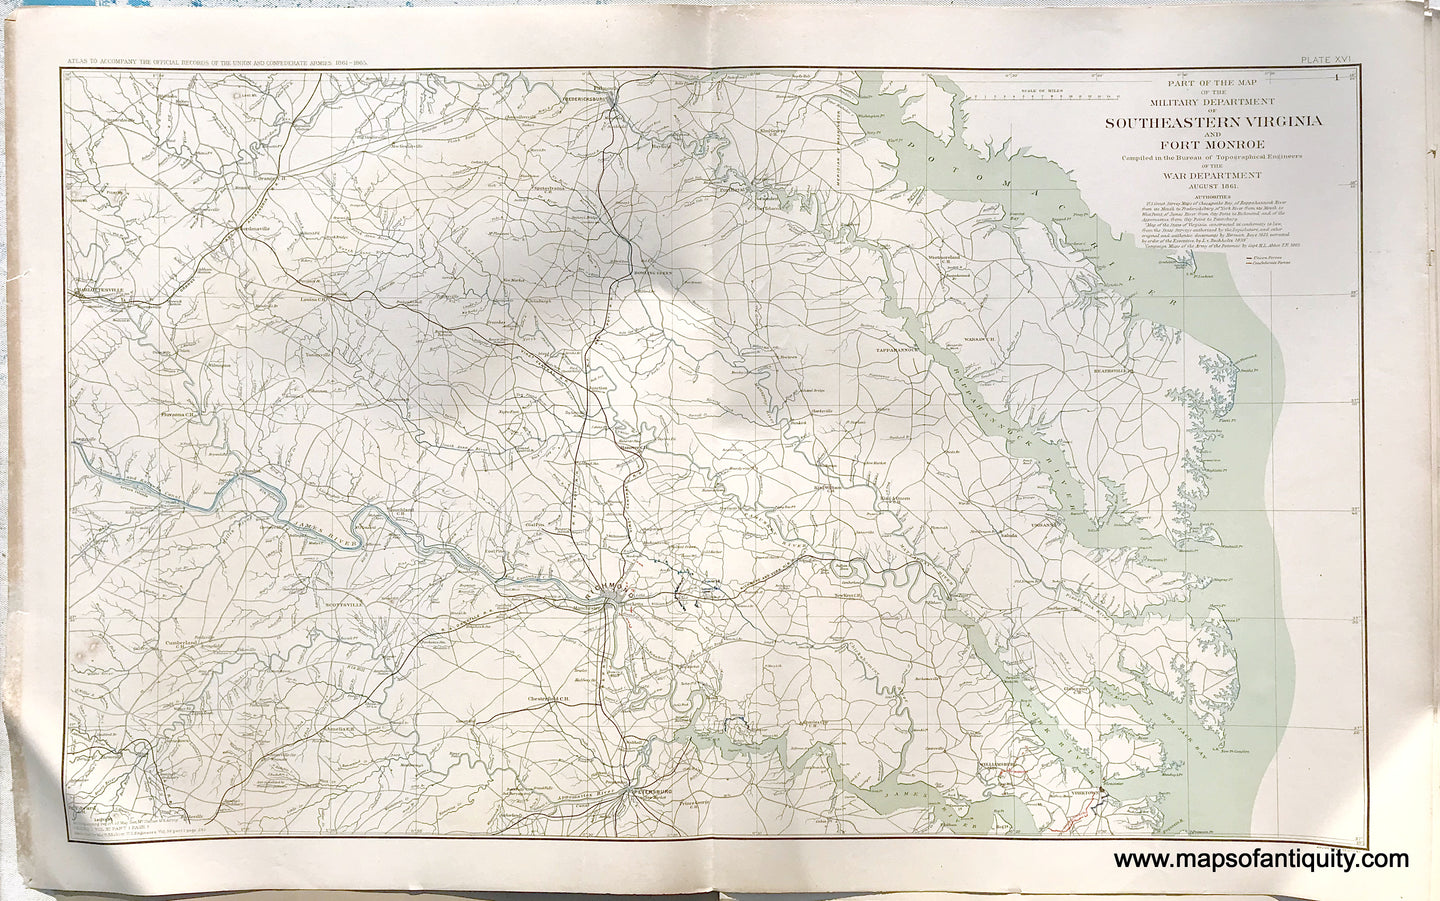 Antique-Lithograph-Print-Plate-16.-Southeastern-Virginia-and-Fort-Monroe-August-1861.-1892-US-War-Dept.-Civil-War-Civil-War-1800s-19th-century-Maps-of-Antiquity